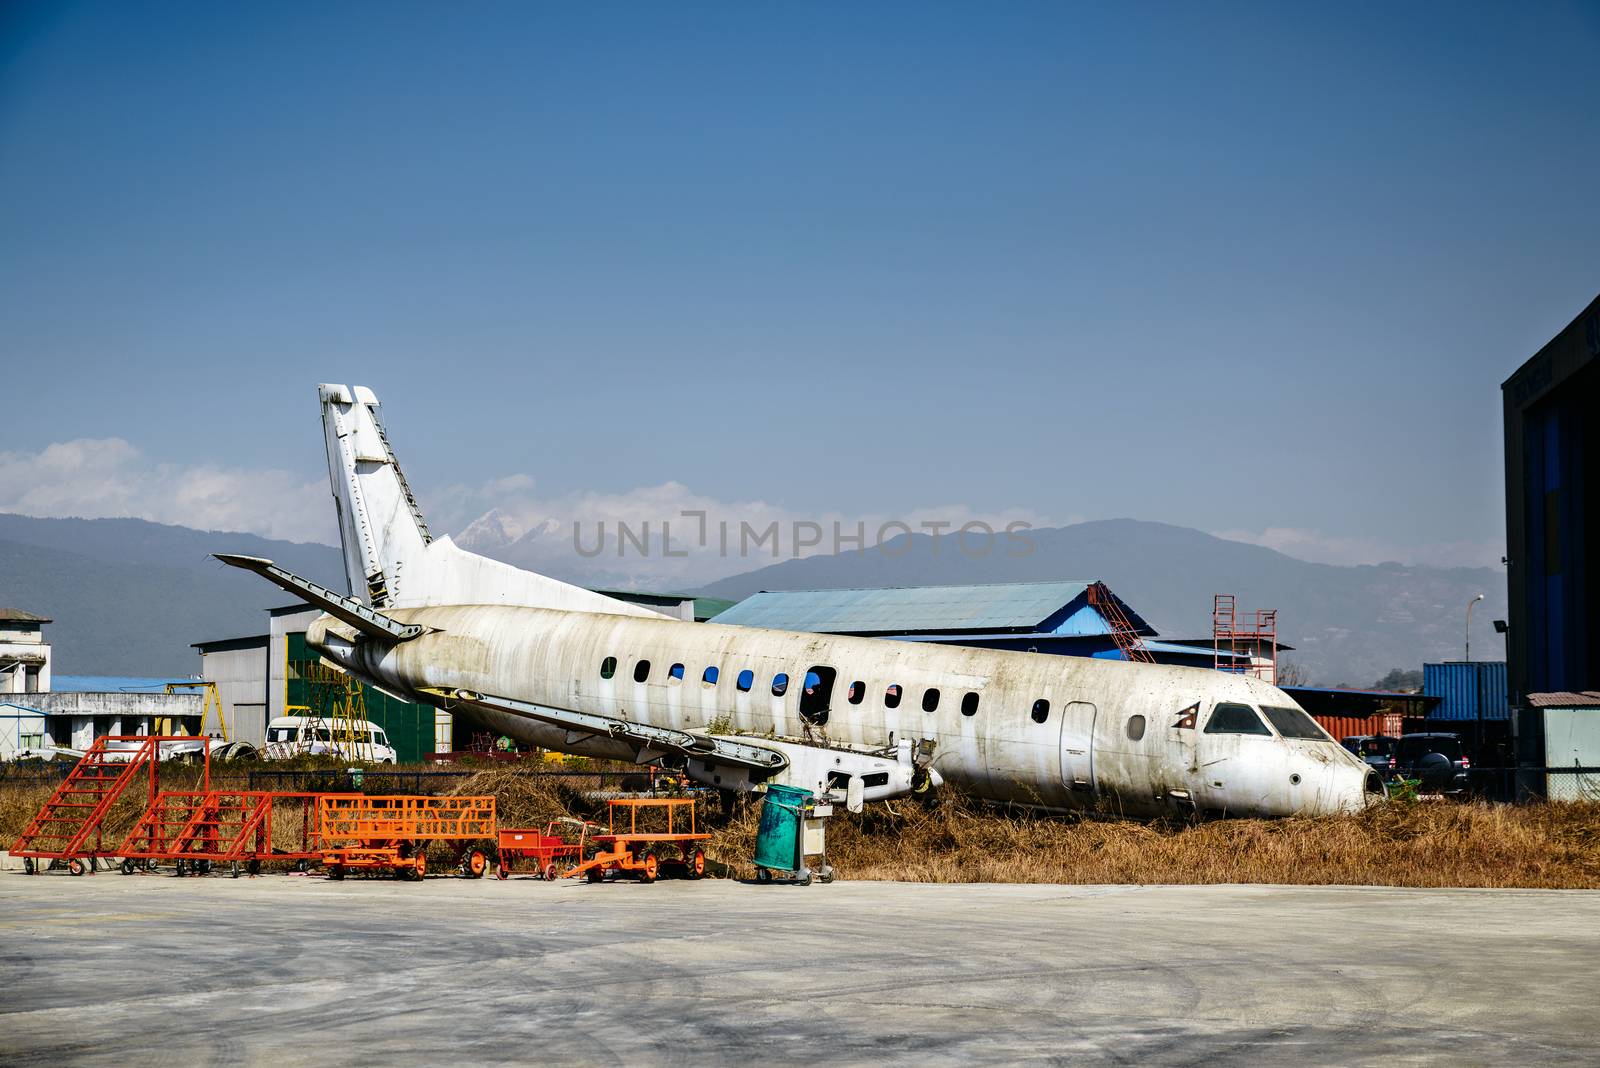 Scrapped airplane at Kathmandu airport in Nepal by dutourdumonde